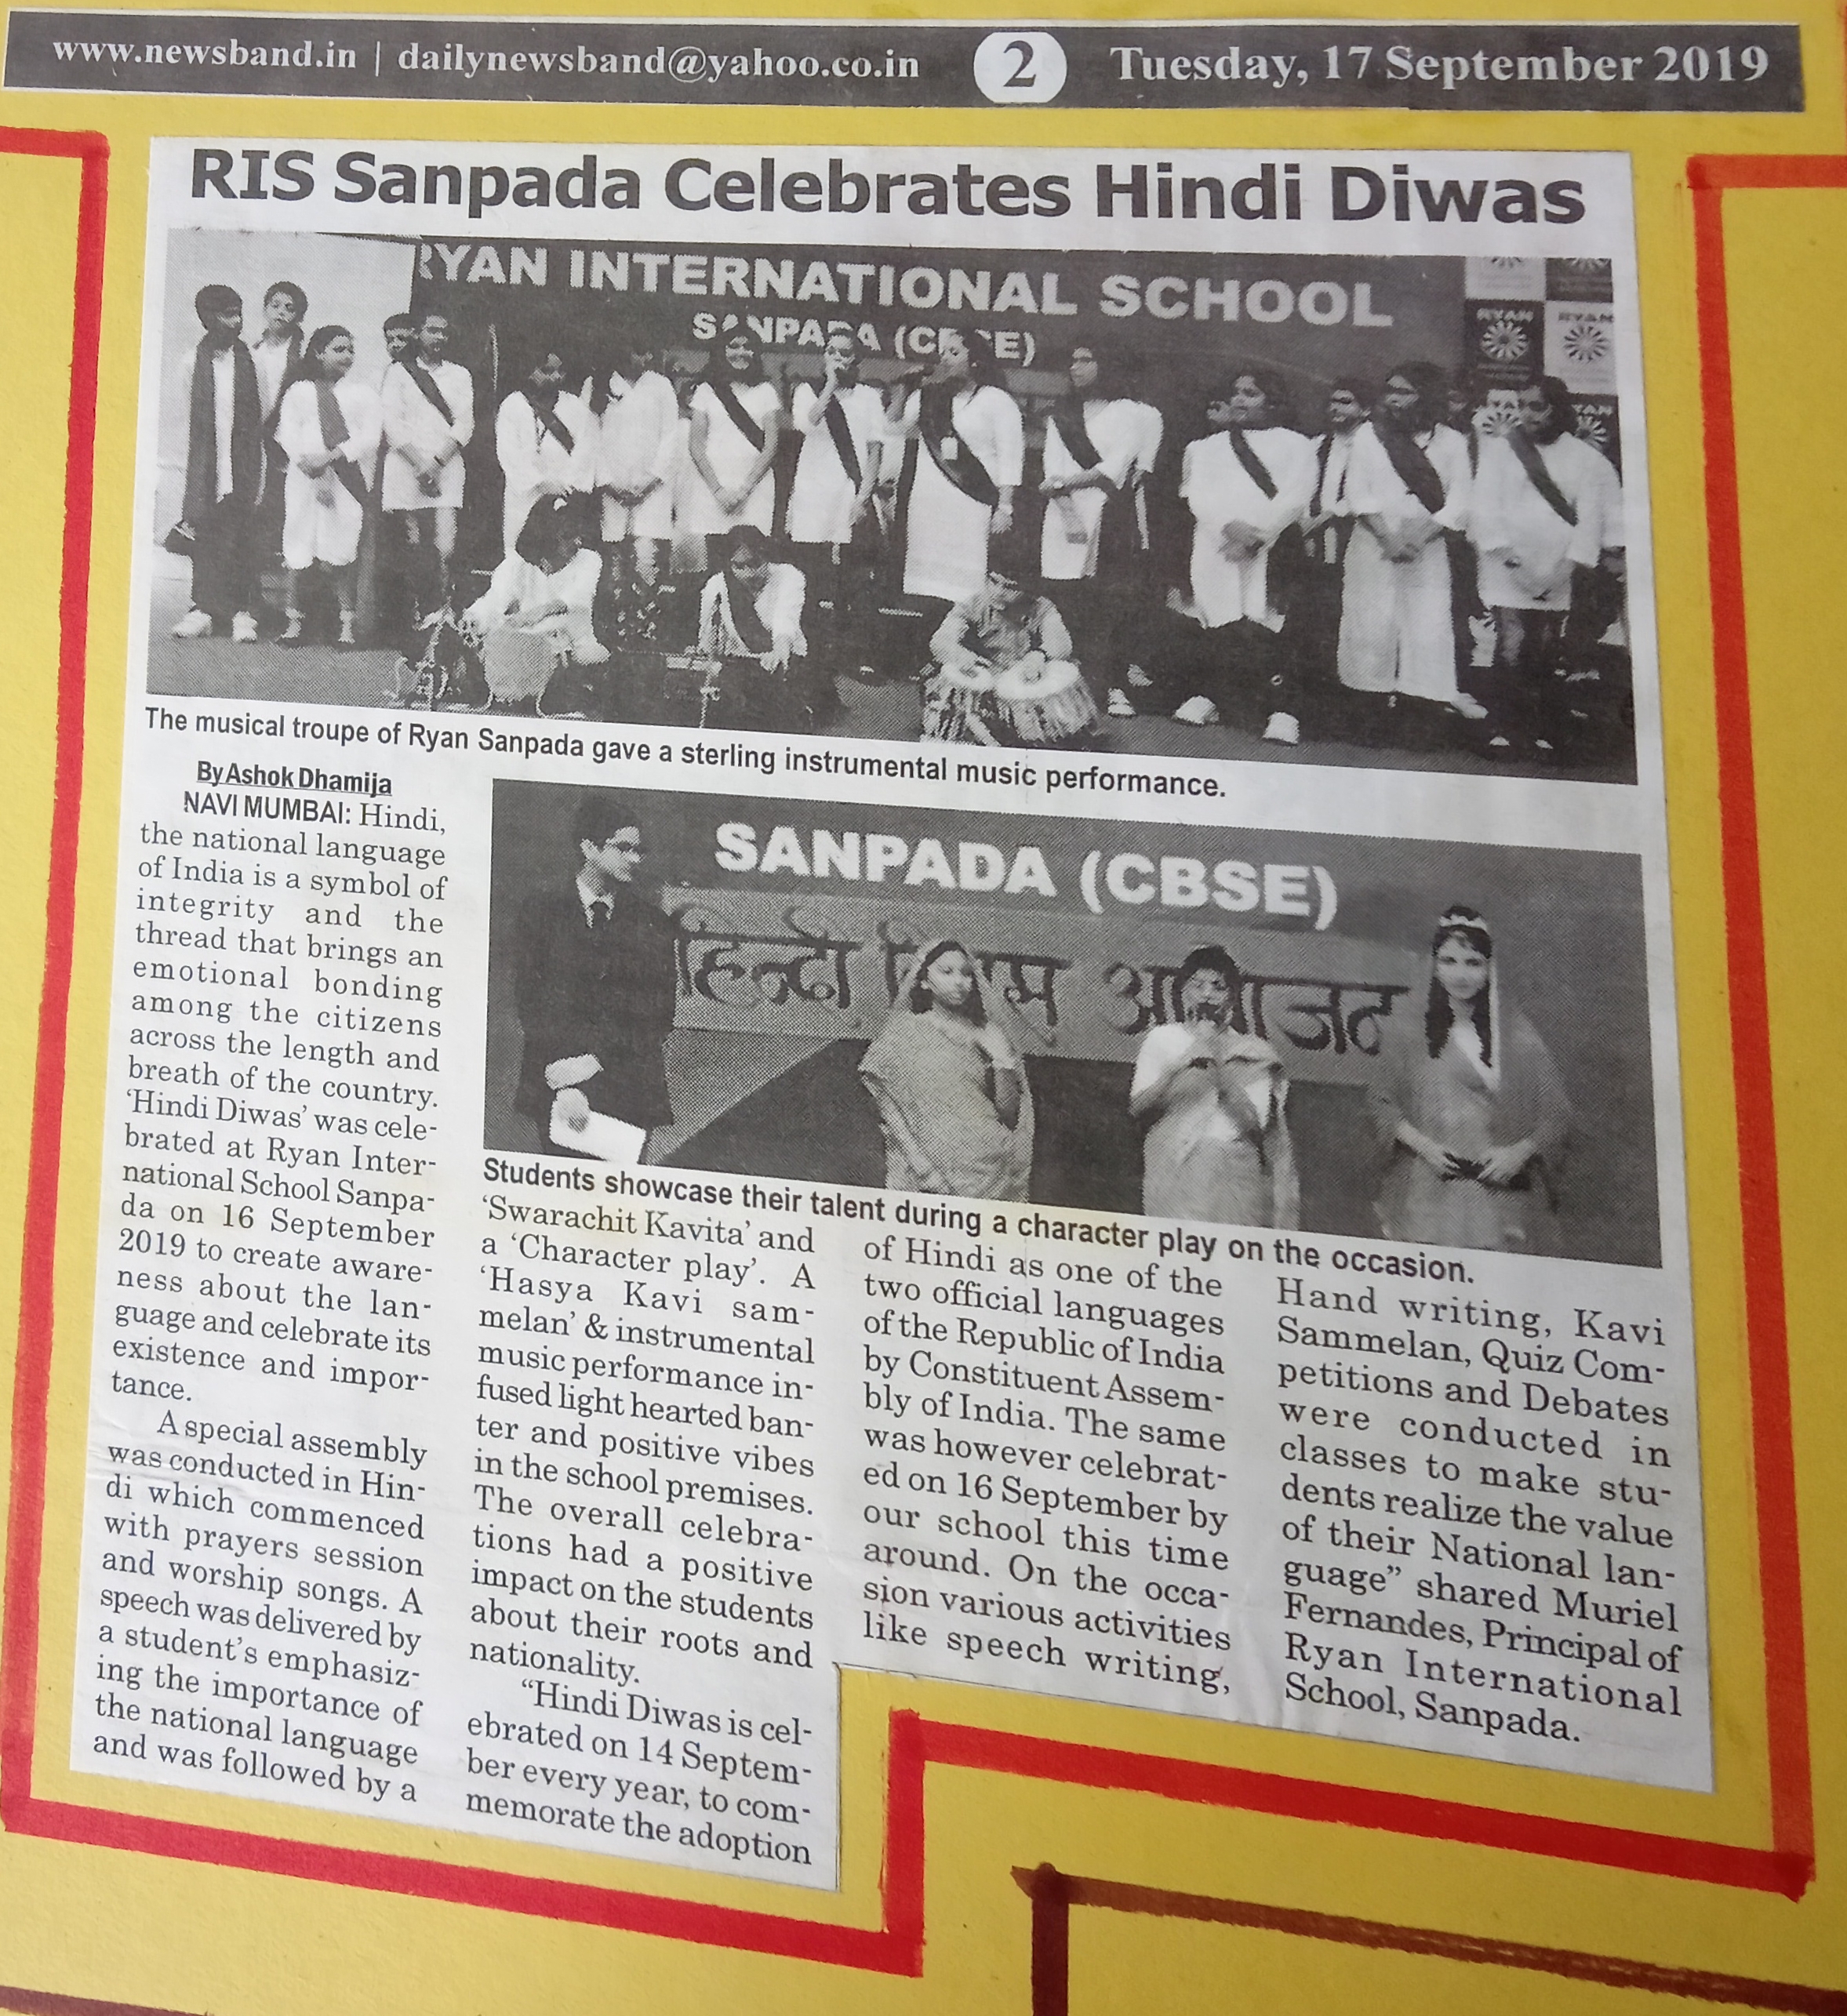 Hindi Diwas celebrations was featured in Newsband - Ryan International School, Sanpada